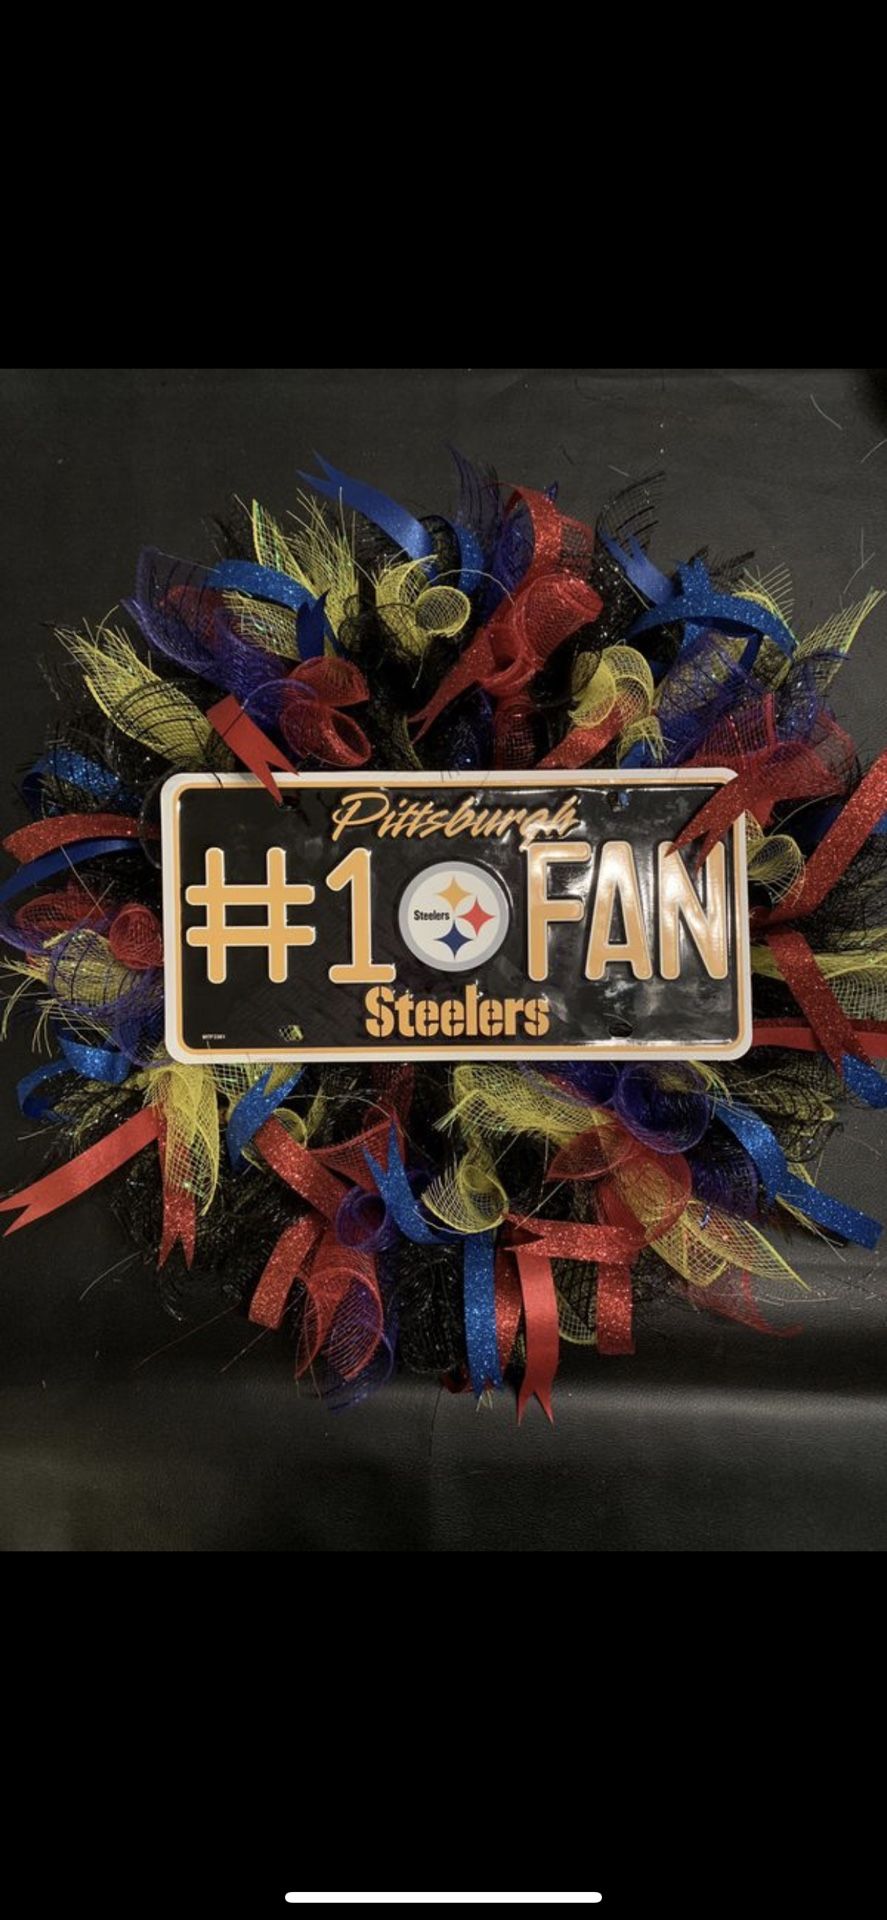 Pittsburgh Steelers Wreath